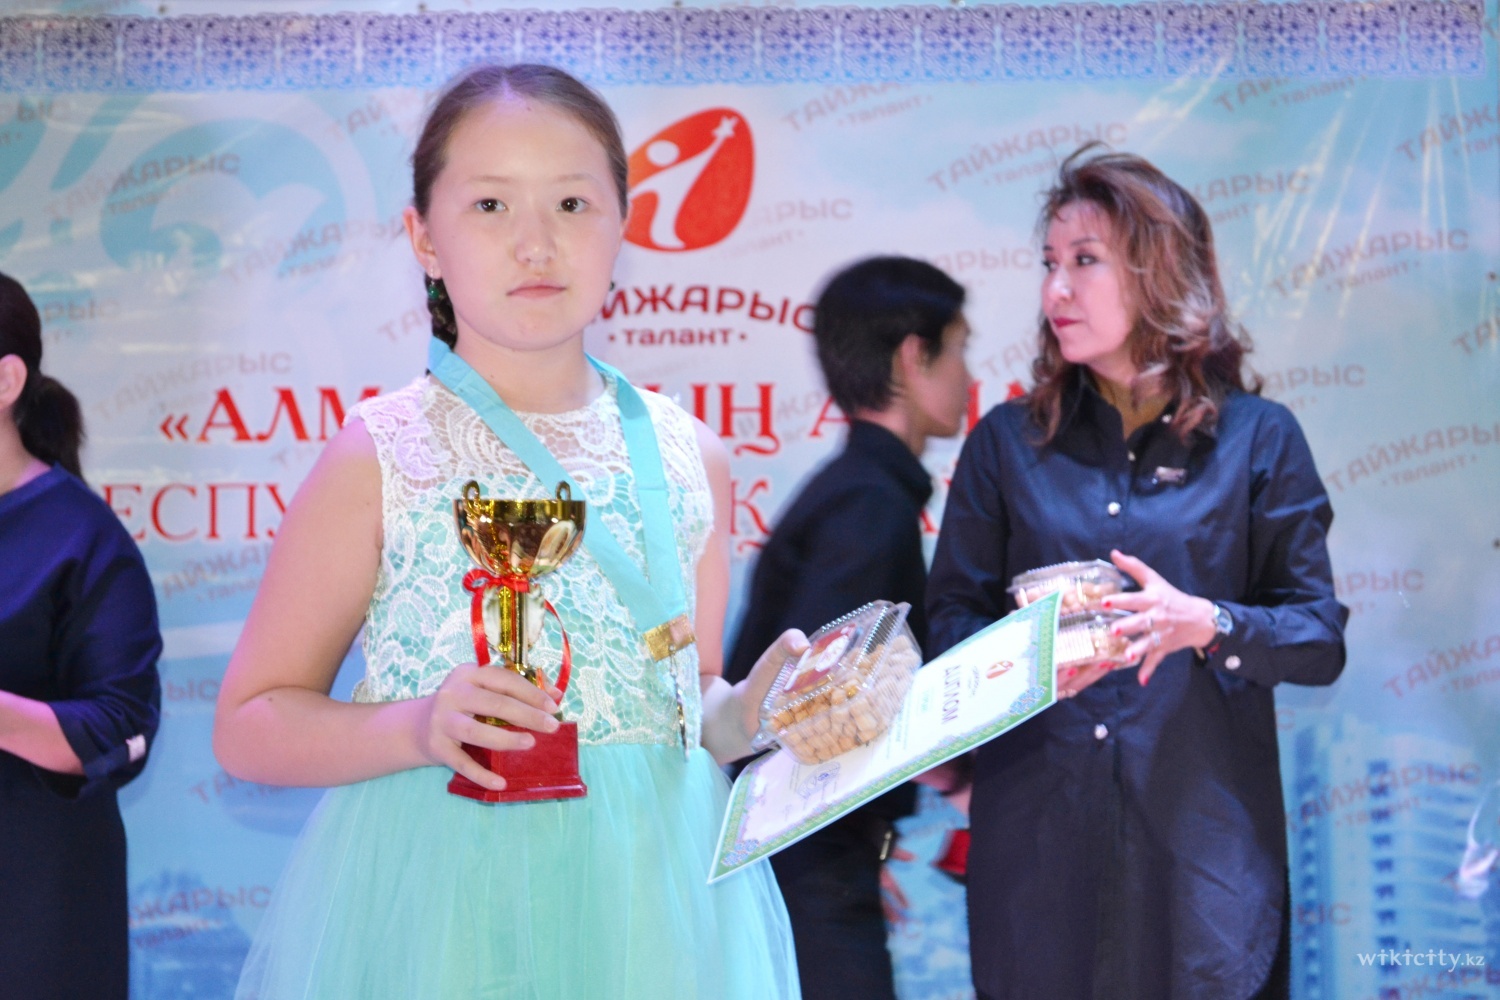 Фото Murager Music School - Almaty. Наши победители Гран-при в  международном конкурсе по домбре